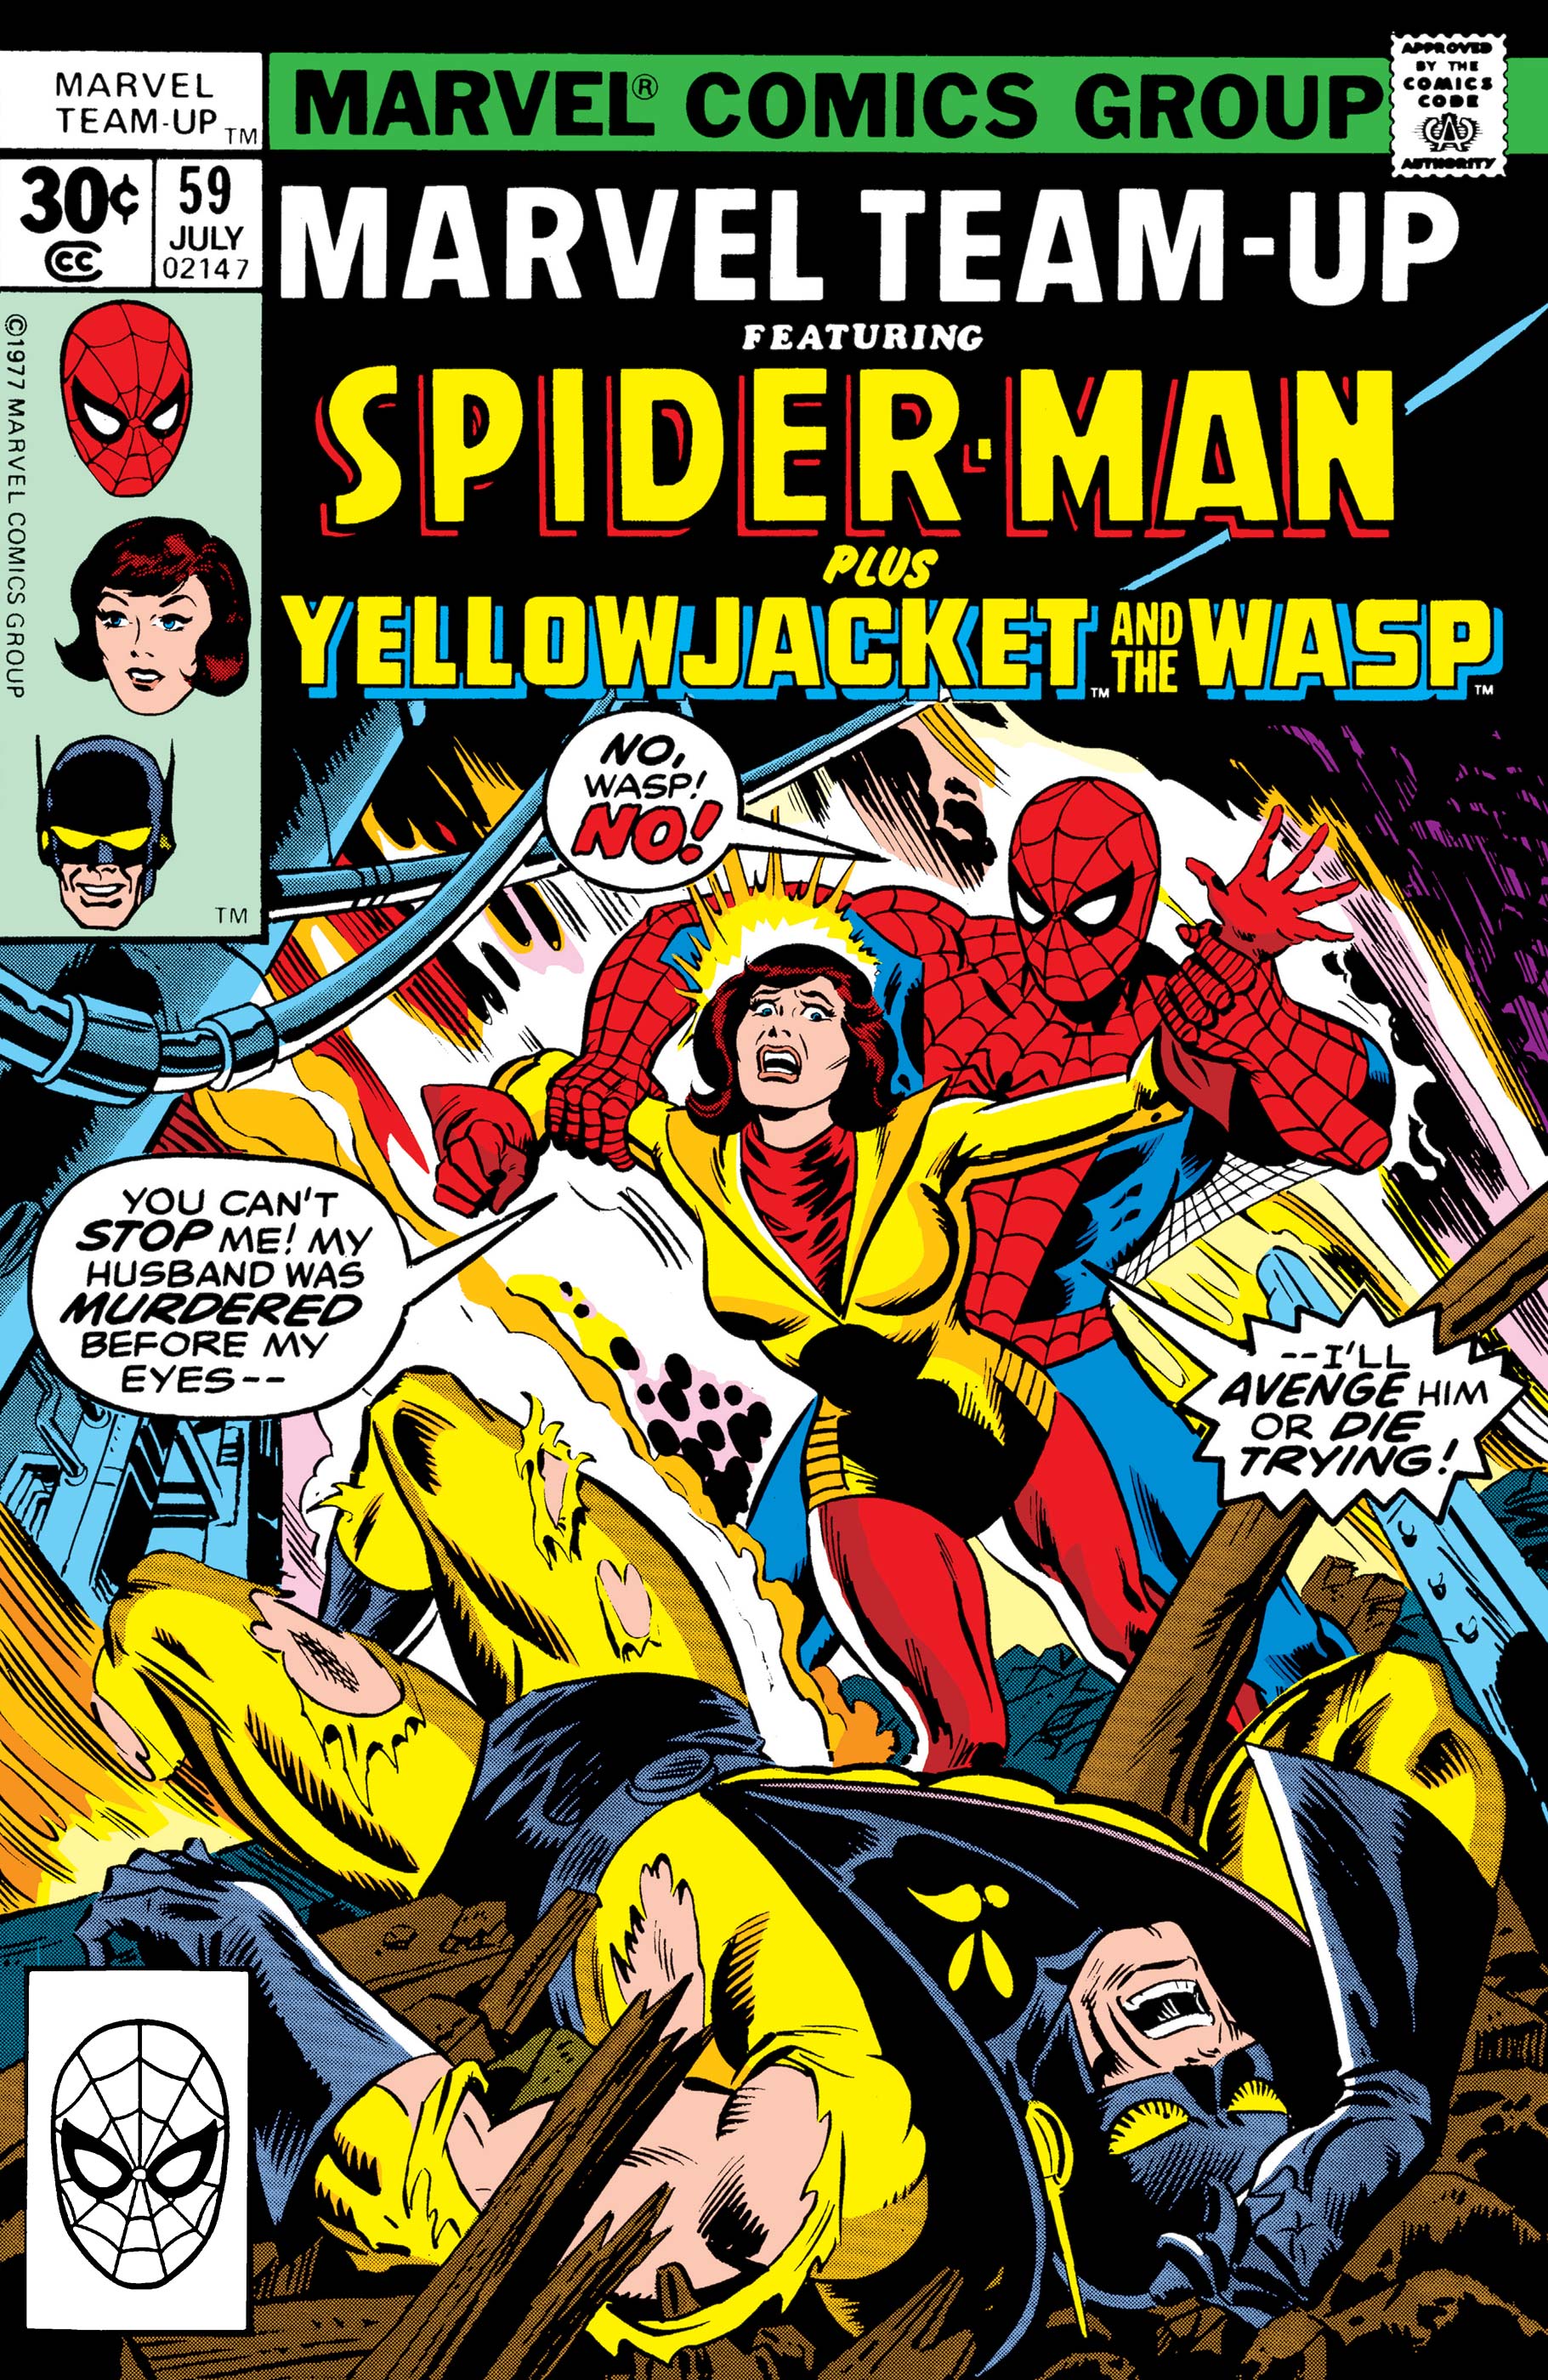 Marvel Team-Up (1972) #59